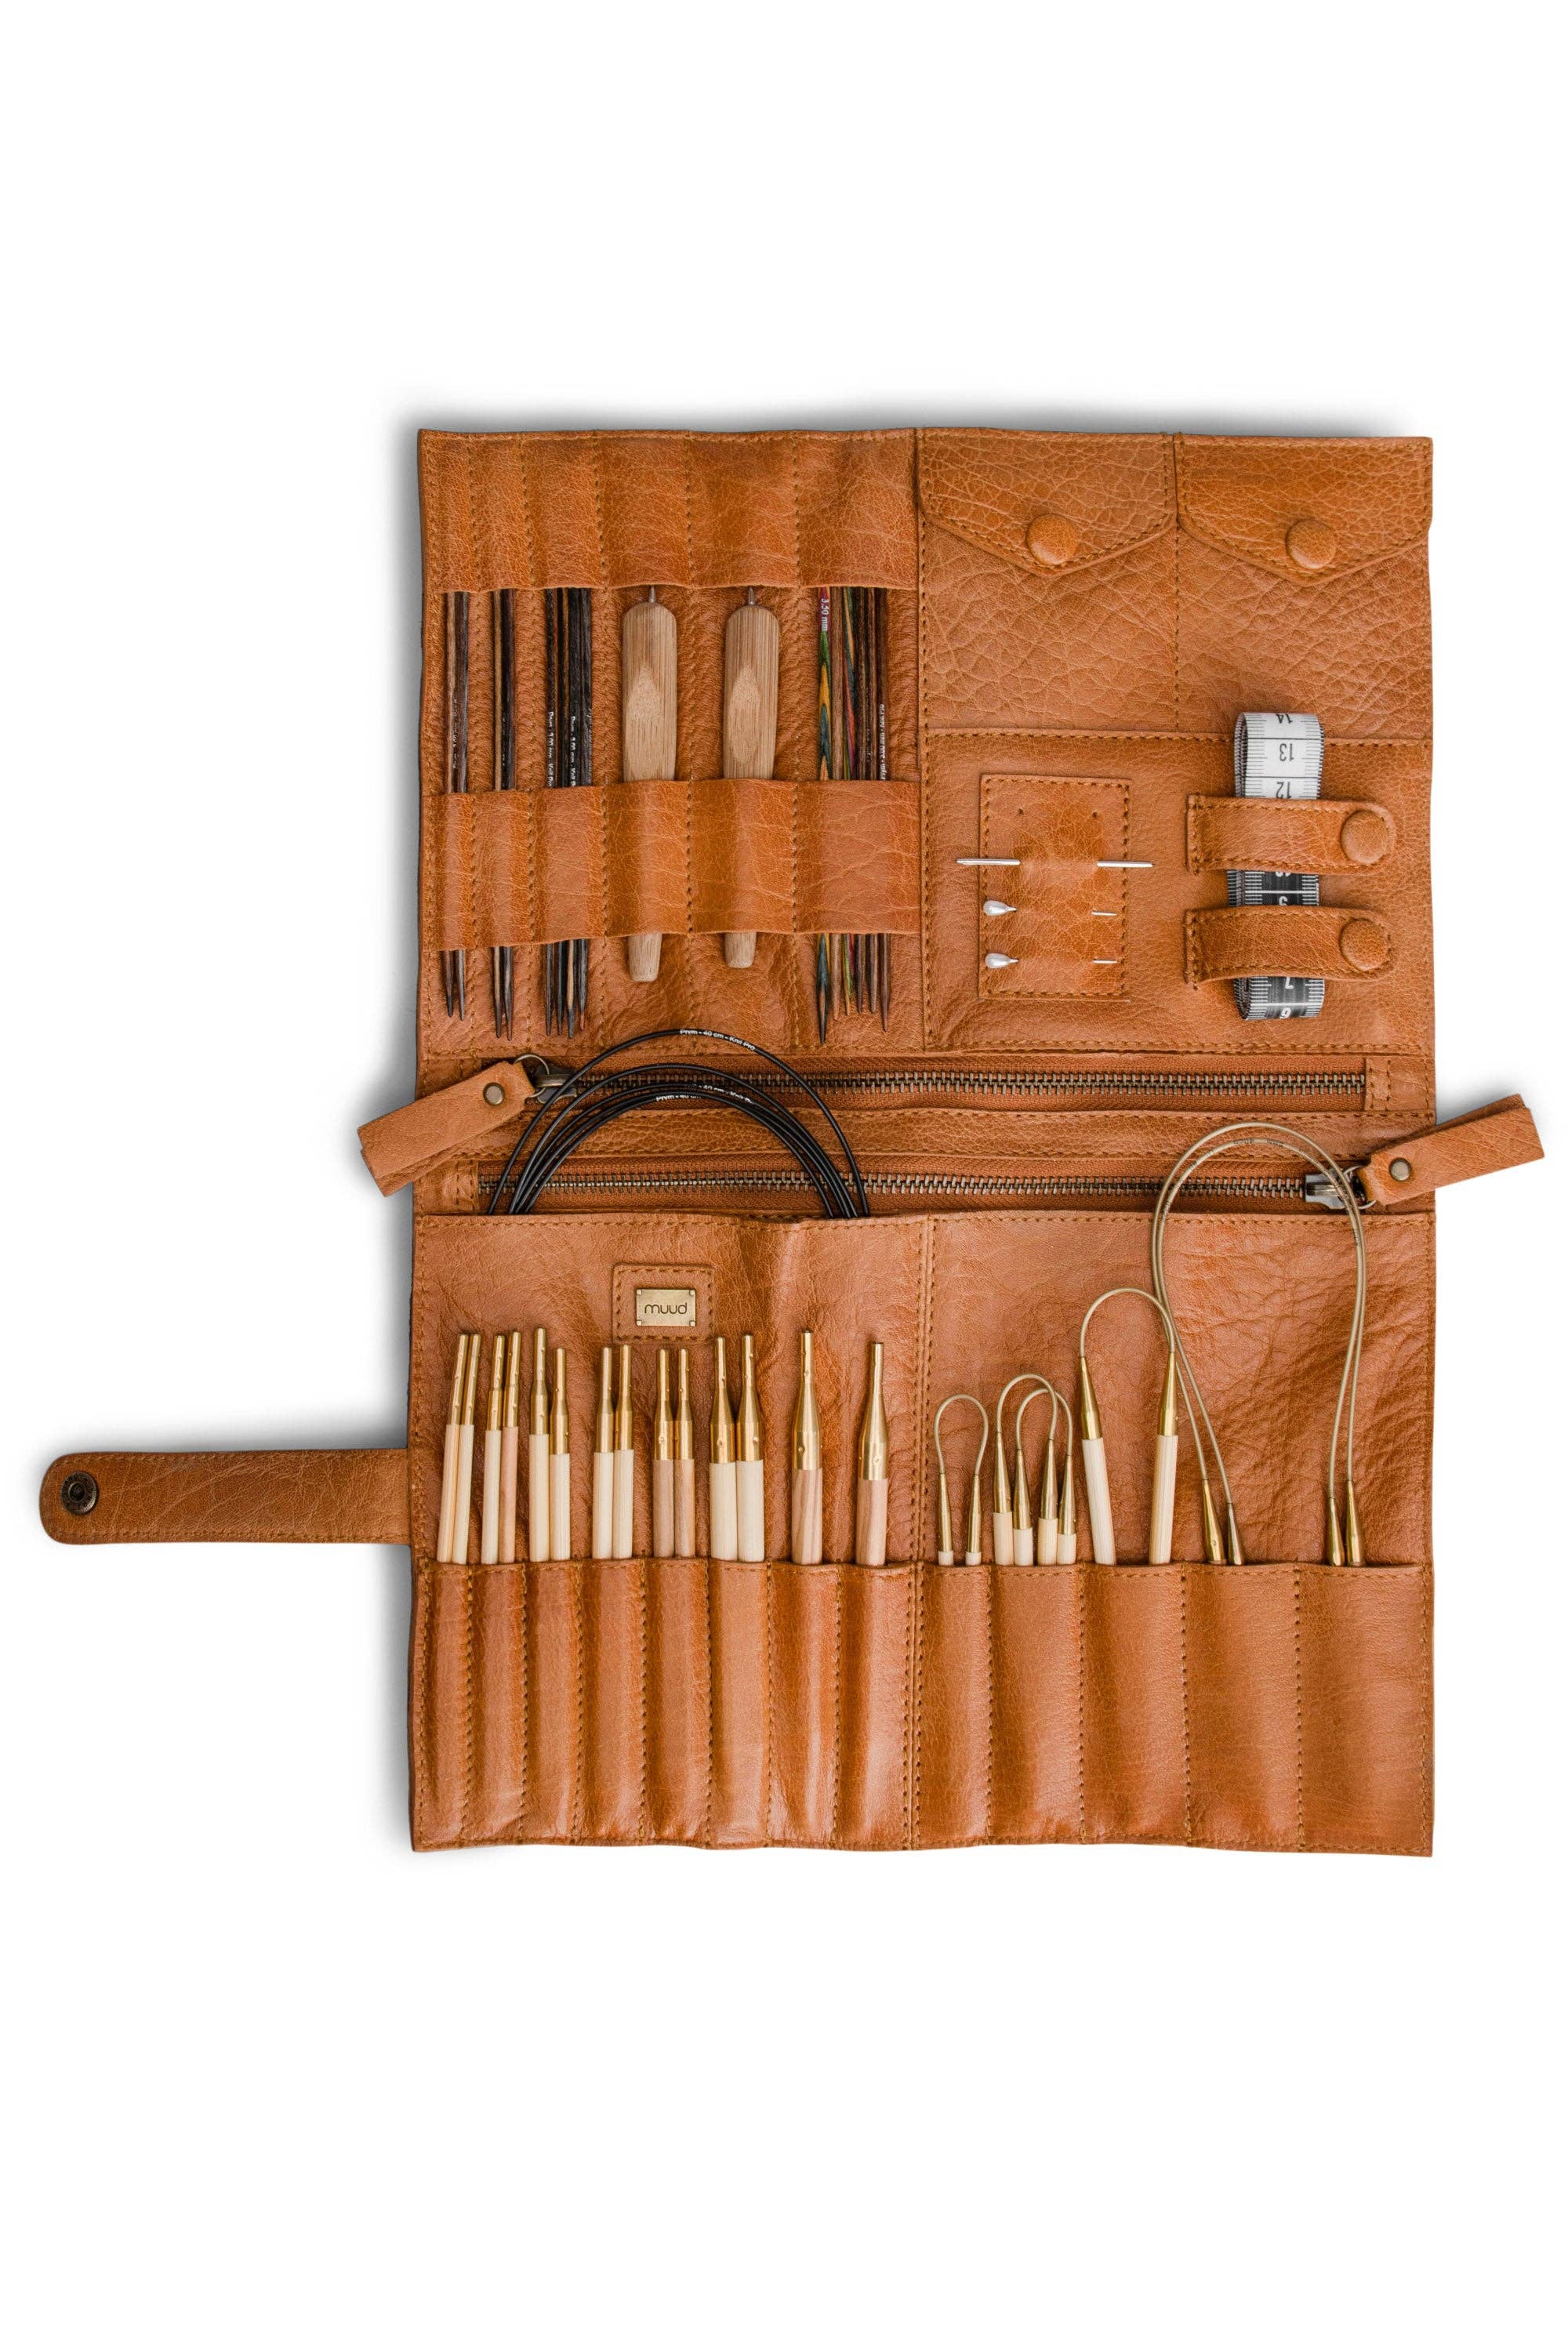 muud  Billie Etui -Leather case for crochet hooks and knitting needles